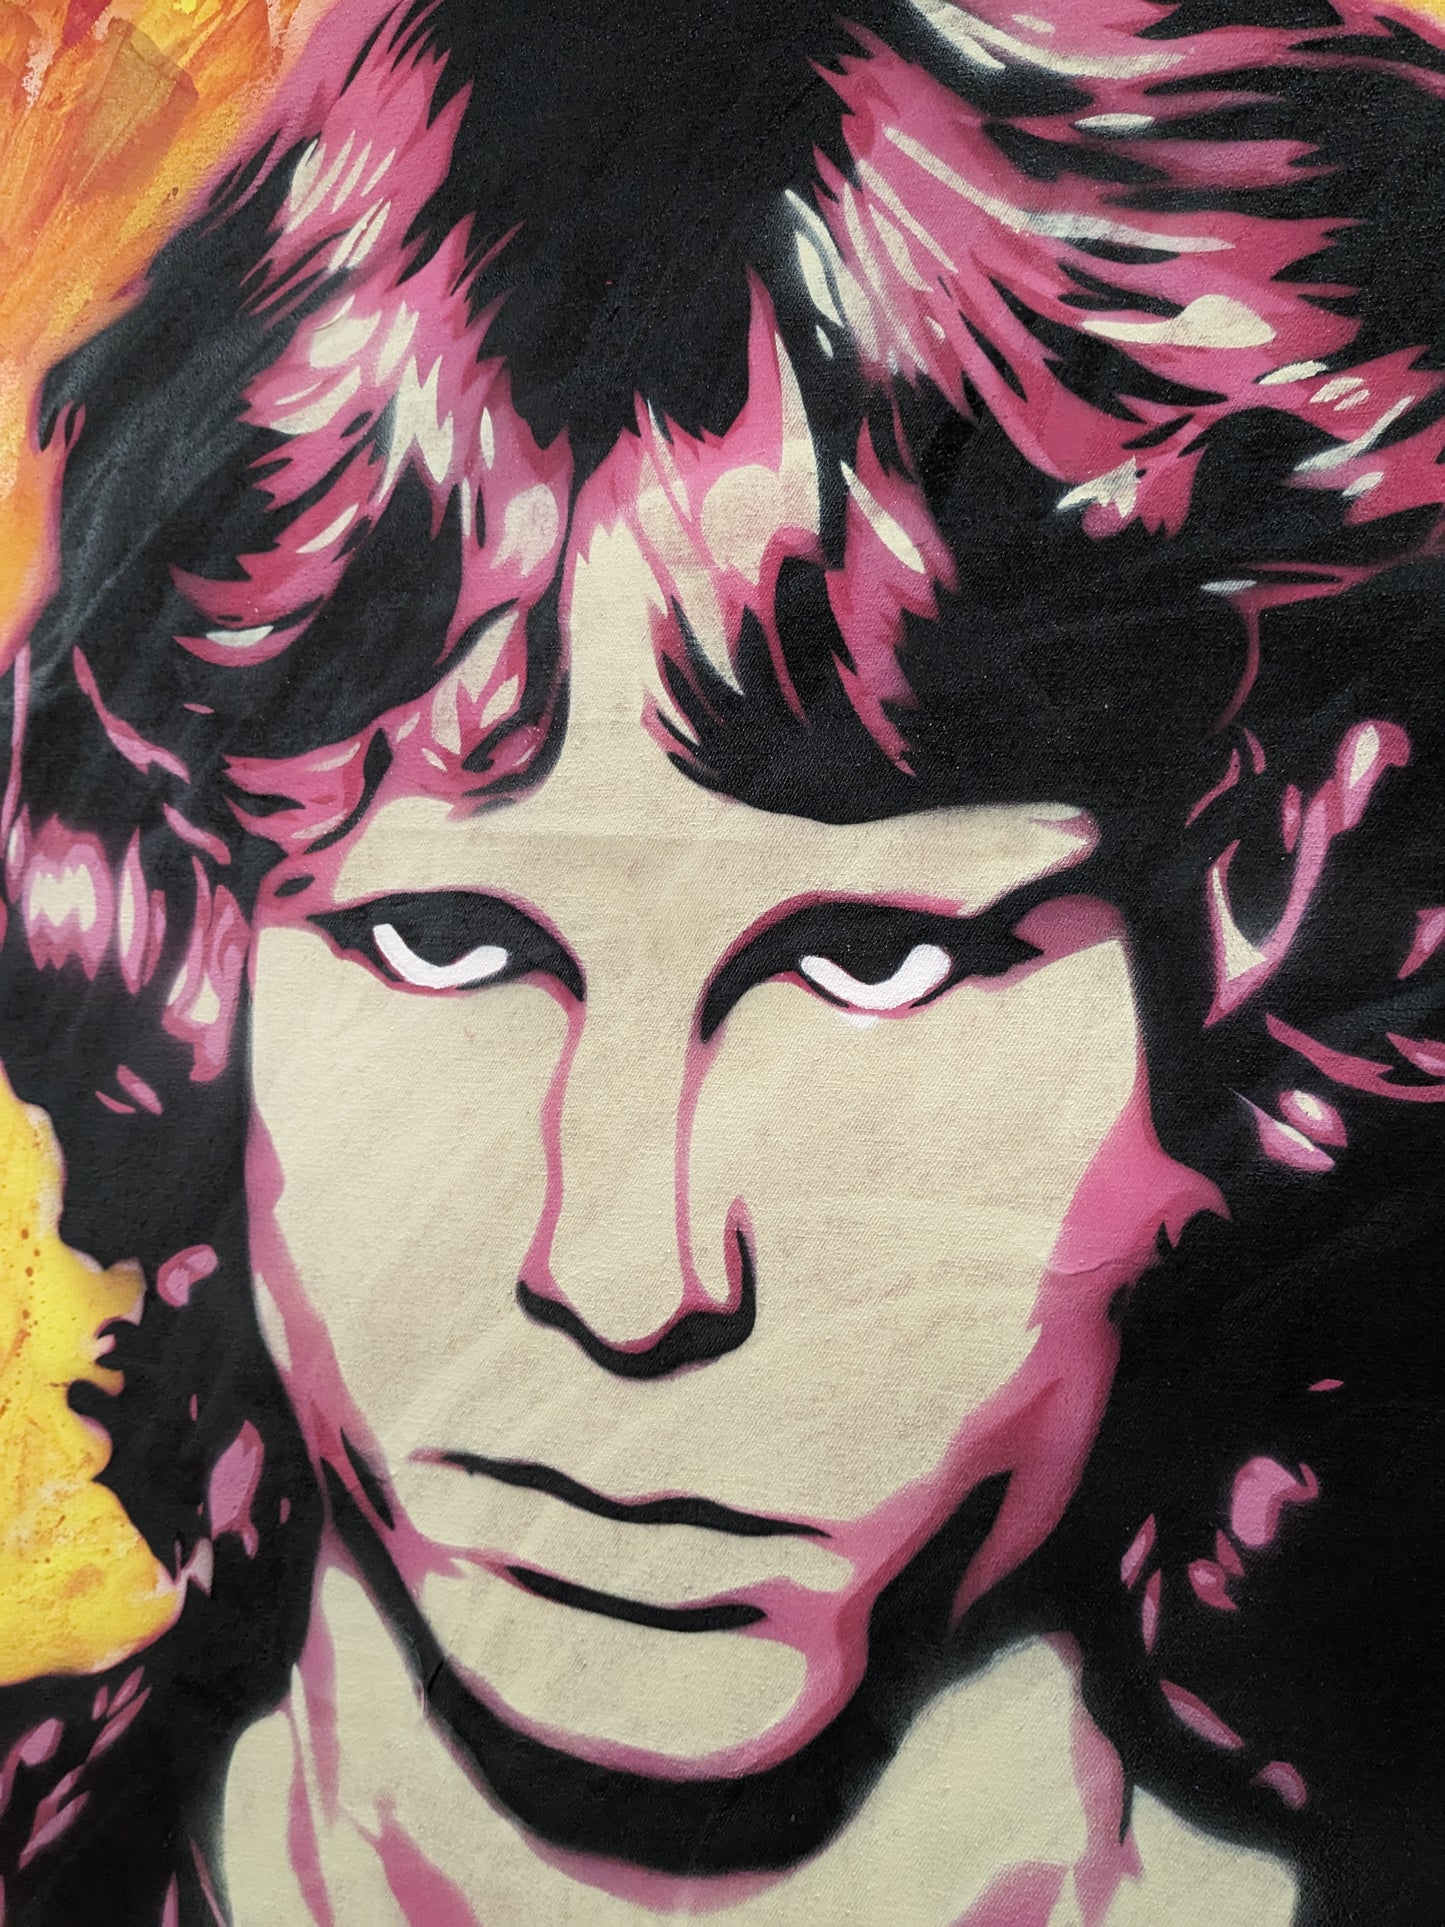 Jim Morrison "The Lizard King" Original 100cm x 100cm Mixed Media Painting